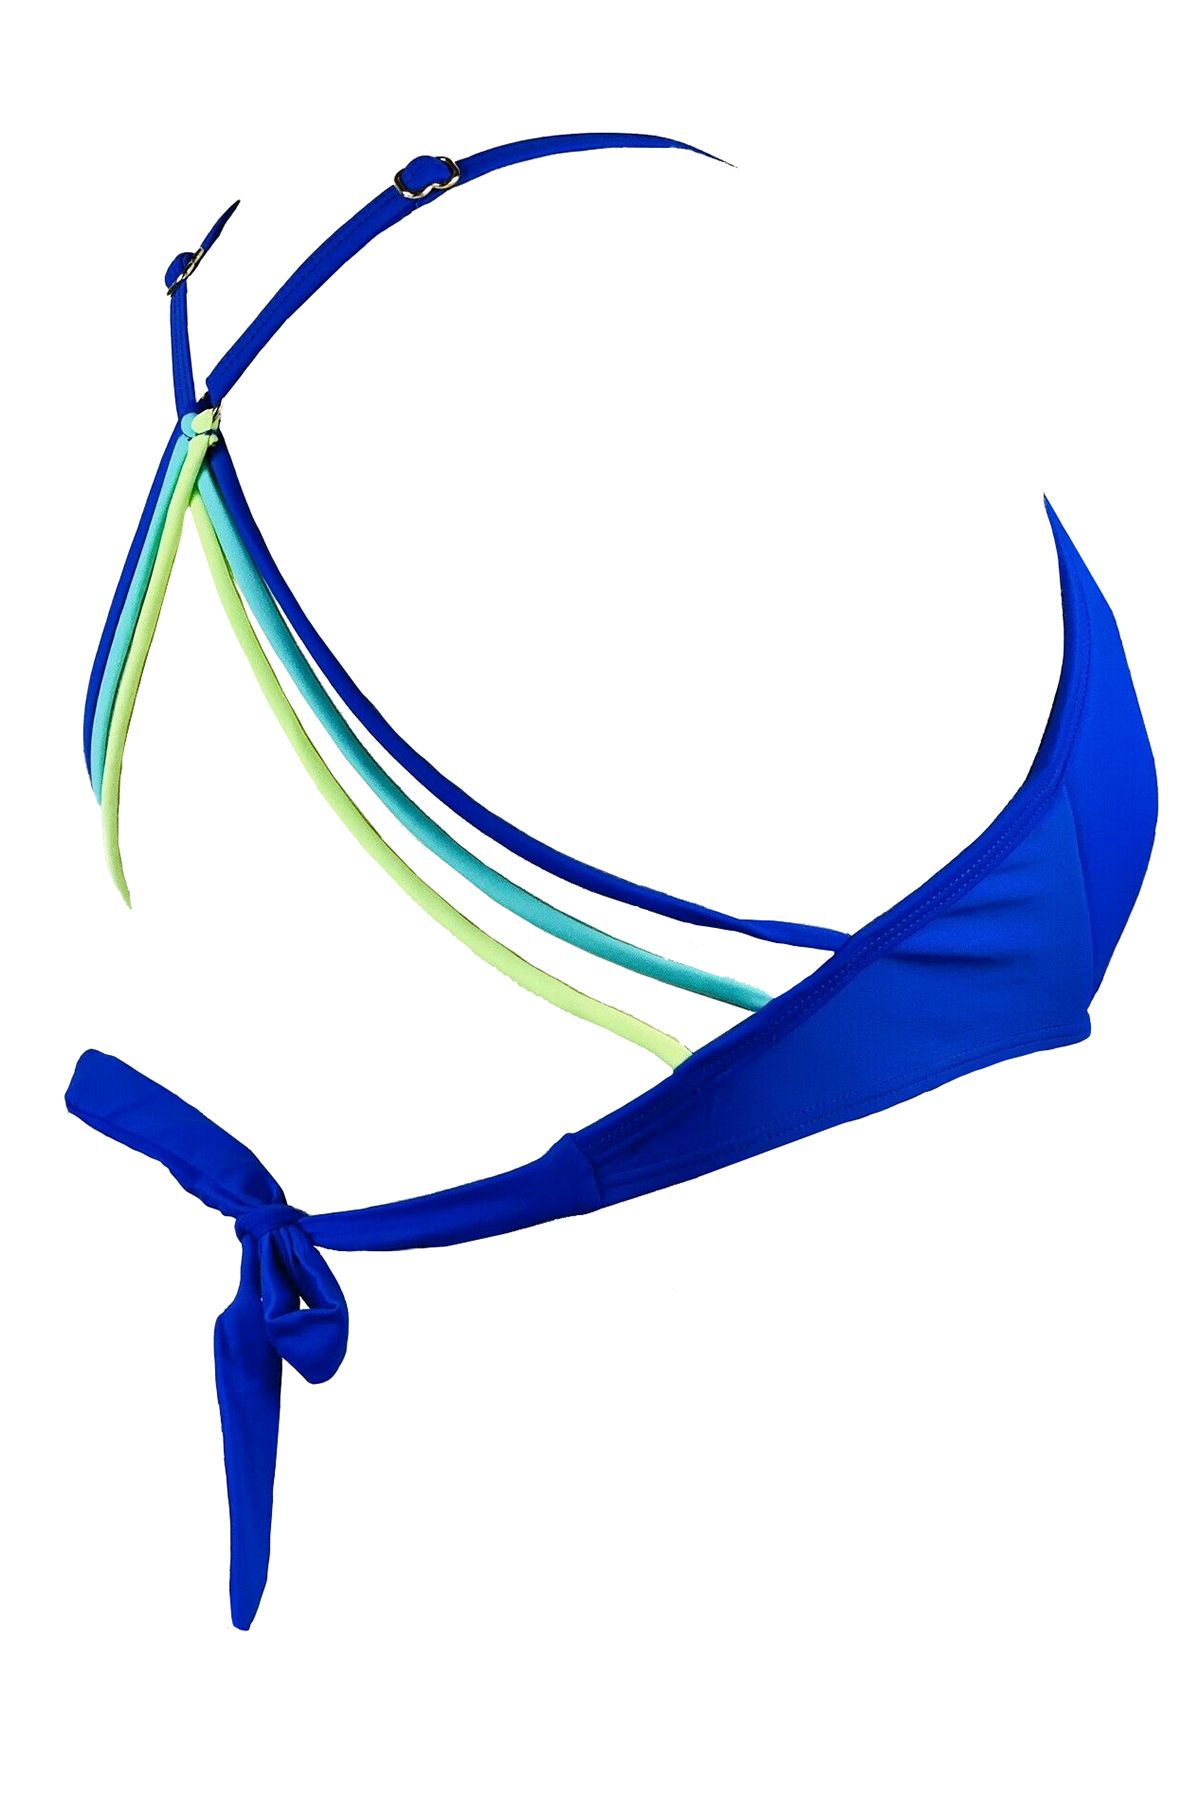 California Waves Blue Twist-Front Underwire Push-Up Bikini Top